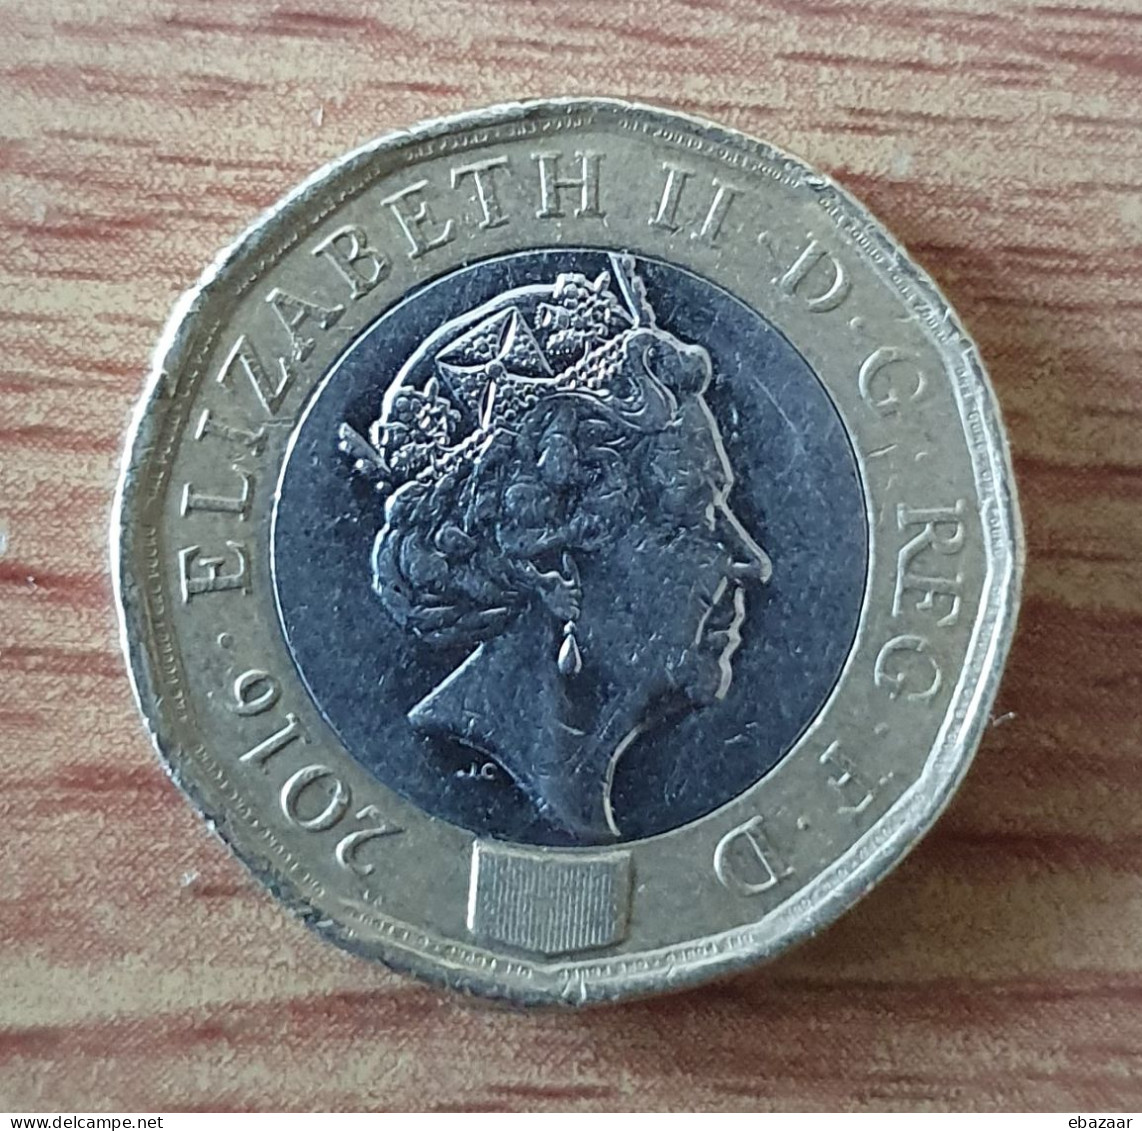 Great Britain 2016 United Kingdom Of England H.M. Queen Elizabeth II - One Pound Coin UK - 1 Pond